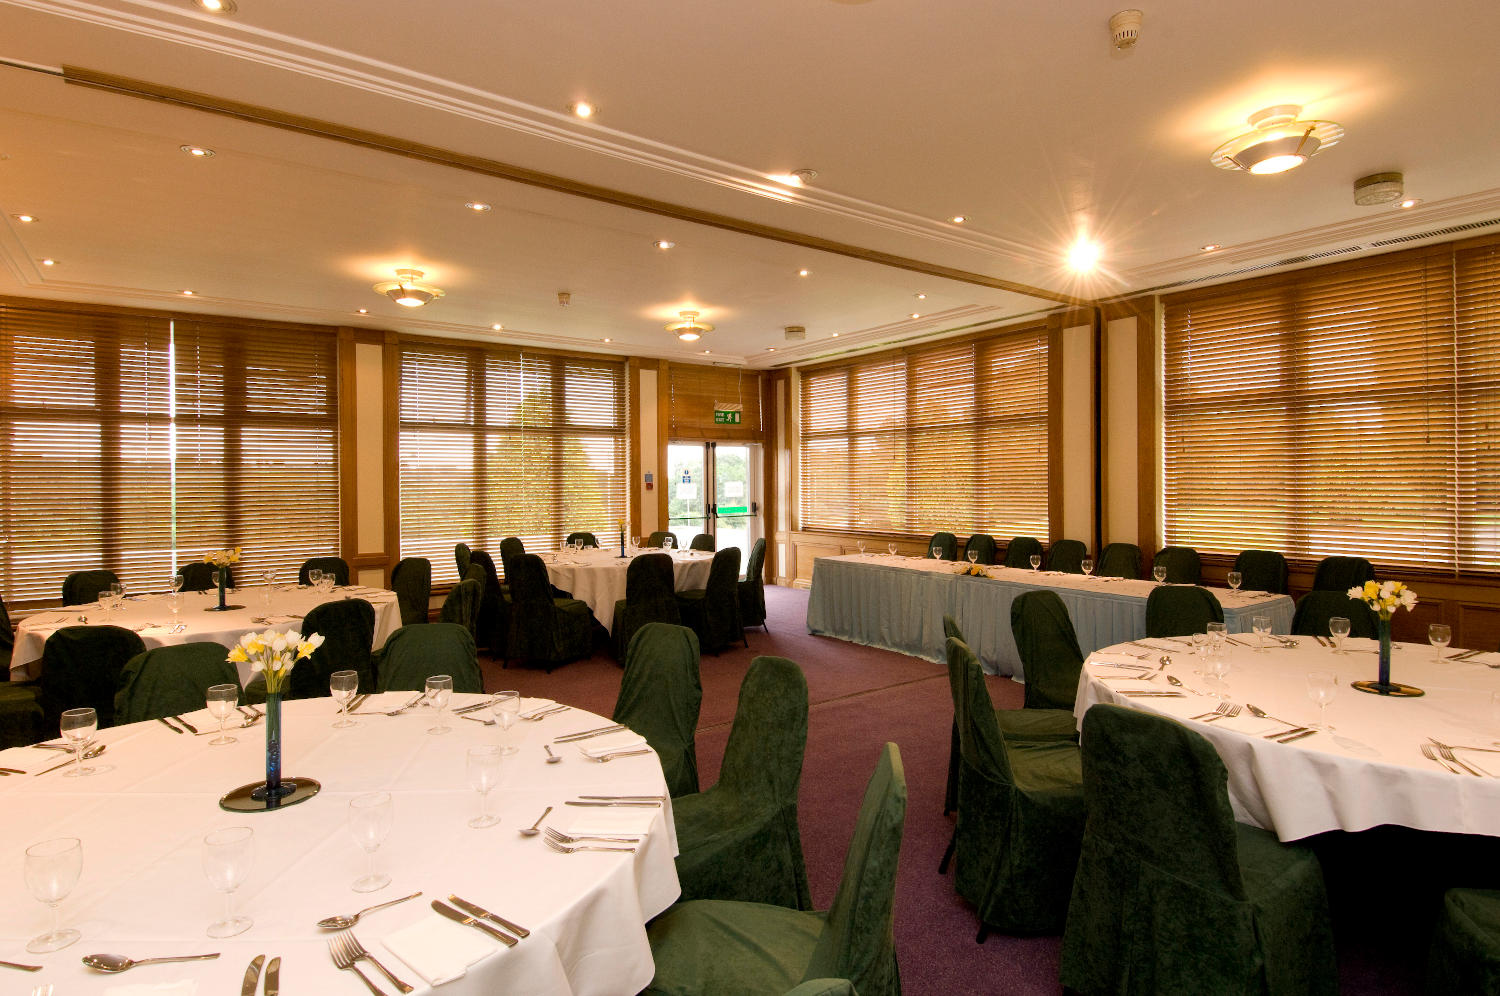 Thyme restaurant interior Premier Inn Cardiff North hotel Cardiff 03337 773984